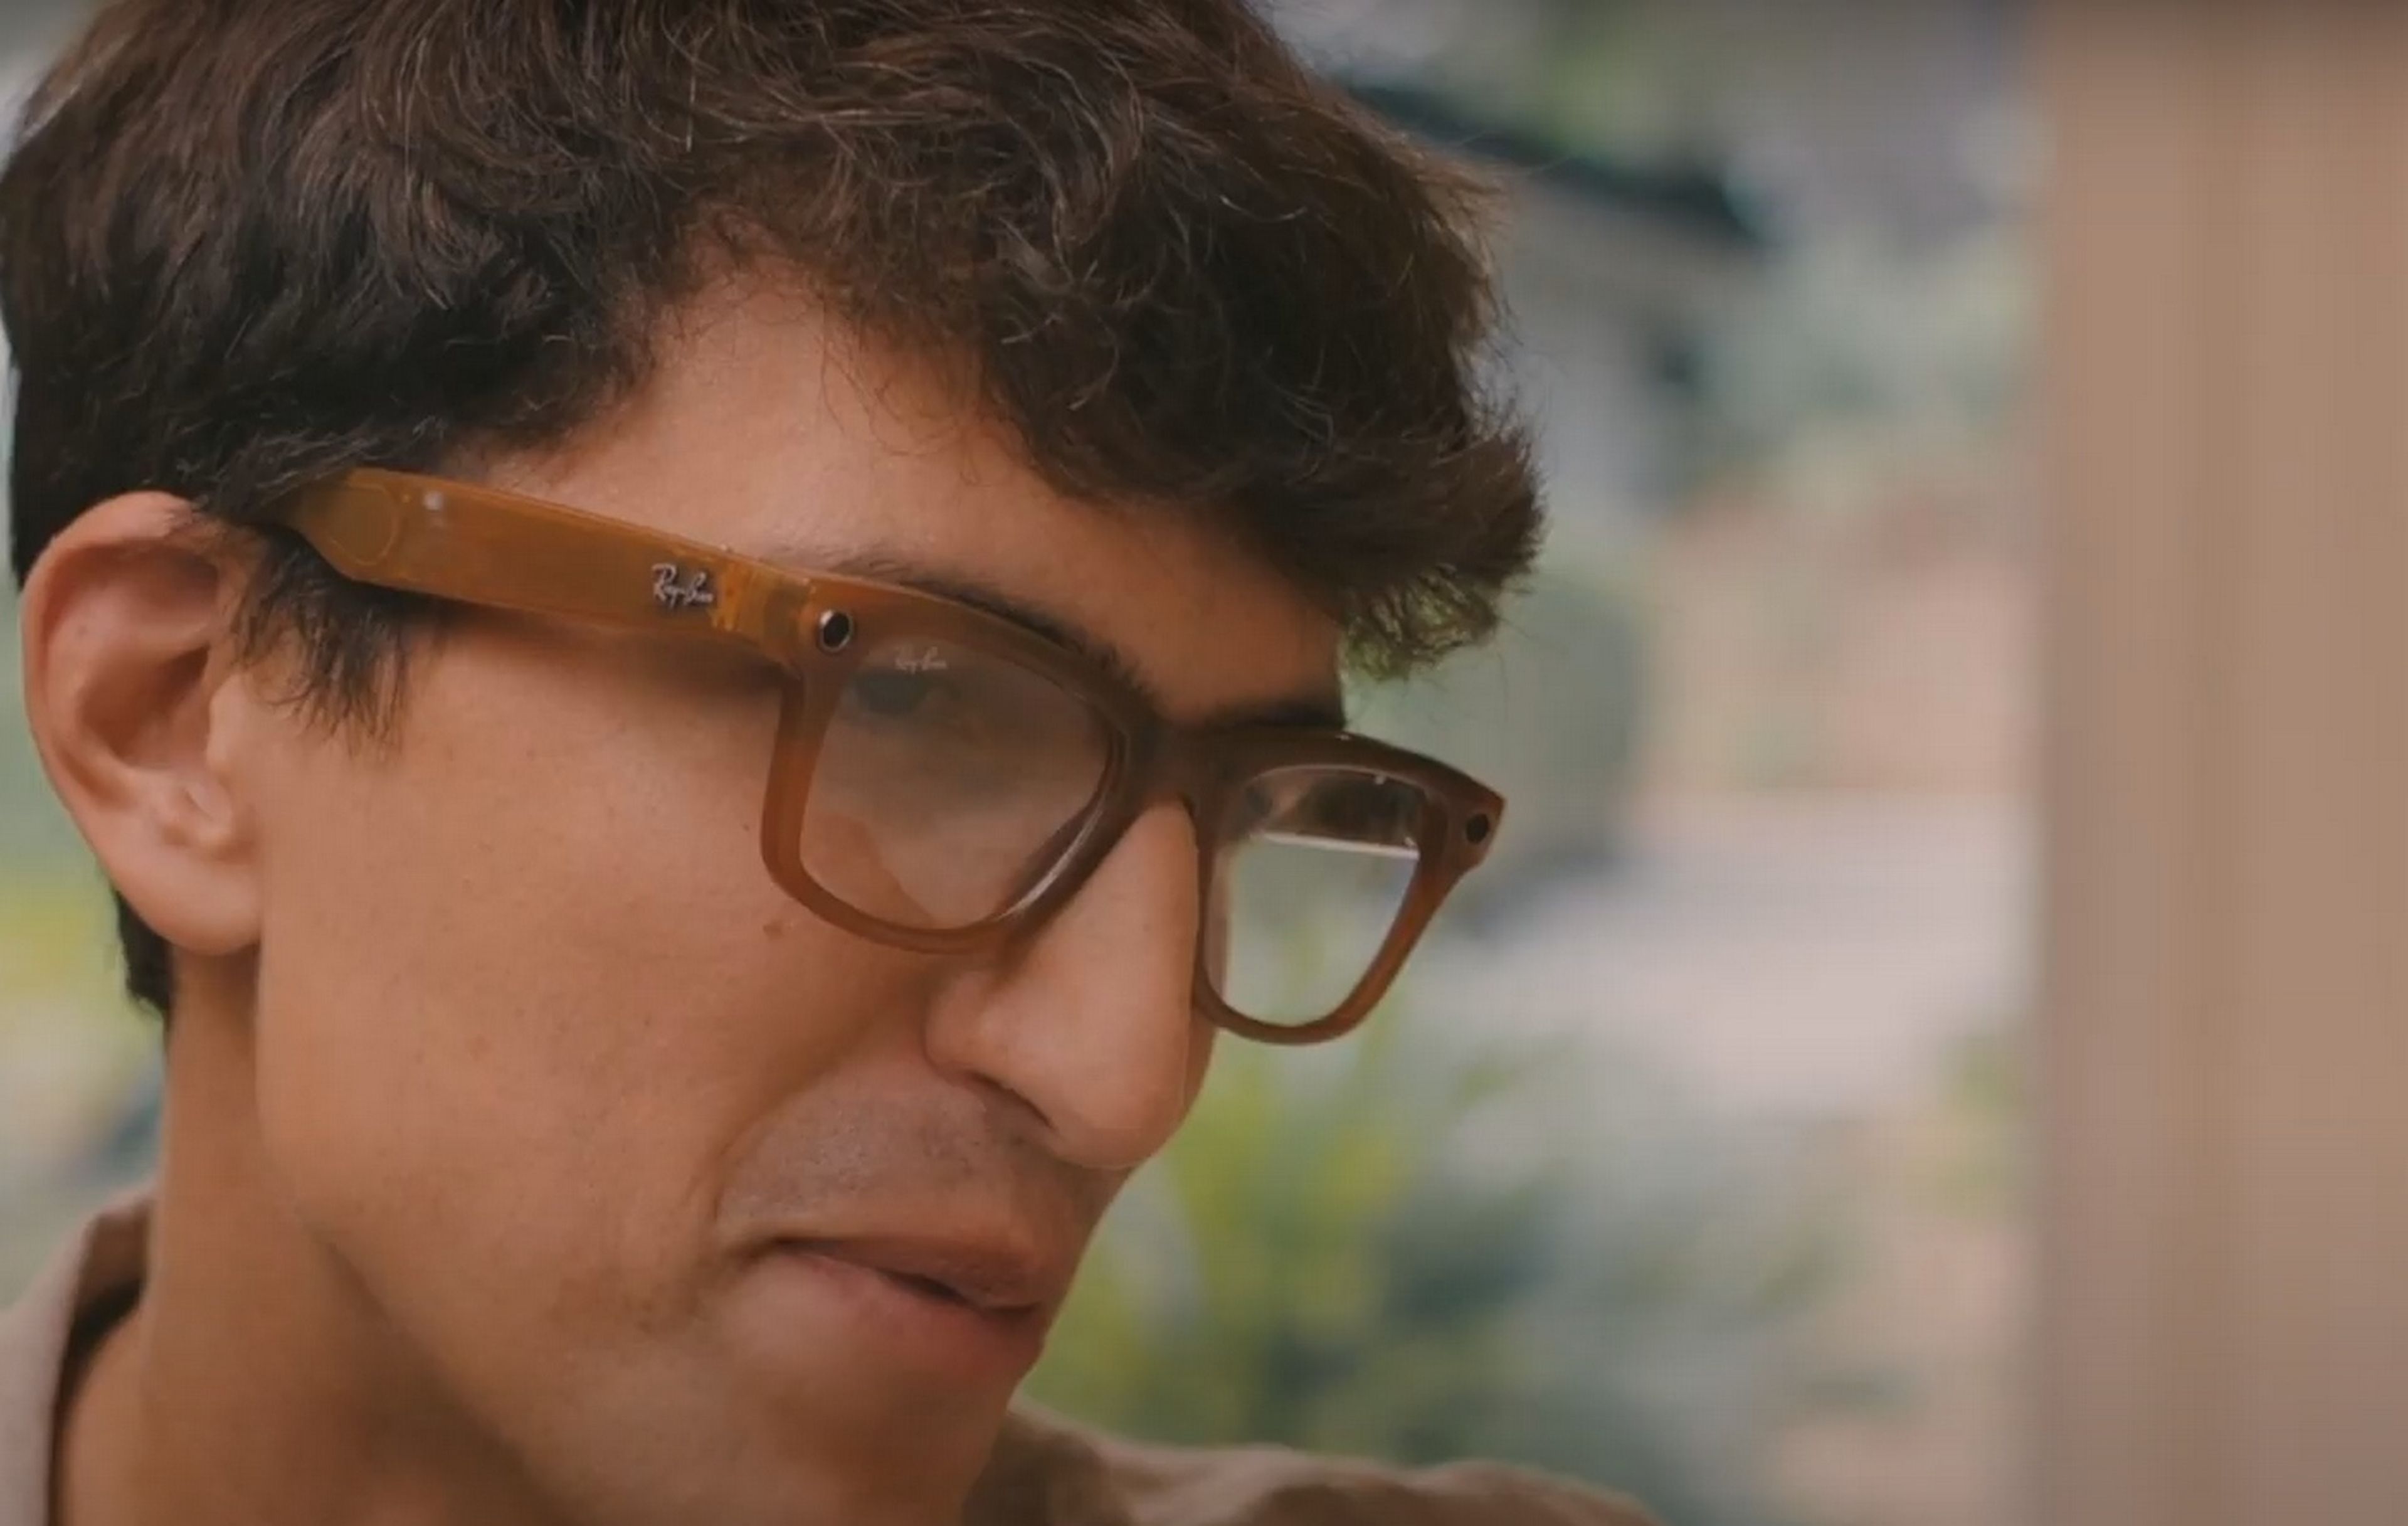 Ray-ban Meta Smart Glasses